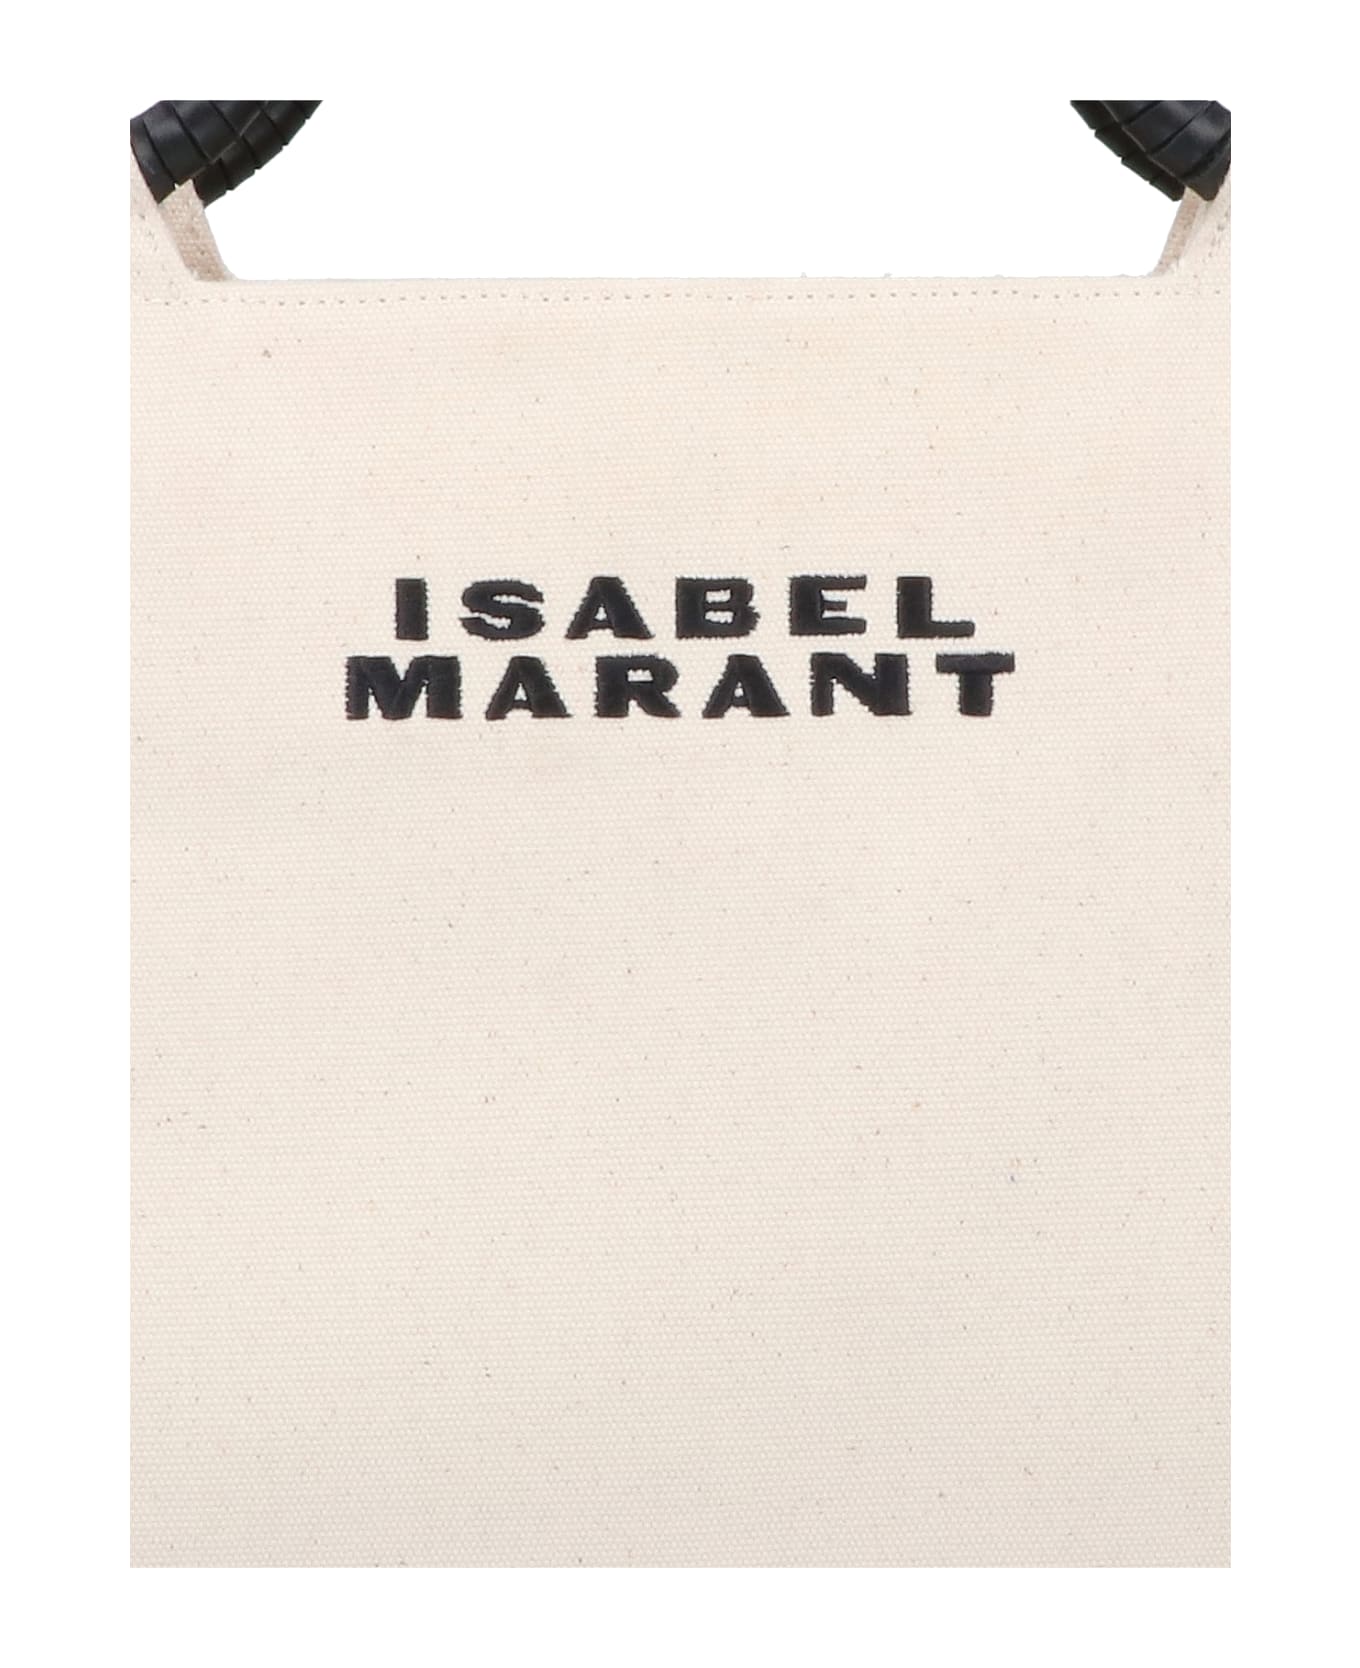 Isabel Marant Tote Bag - Cream